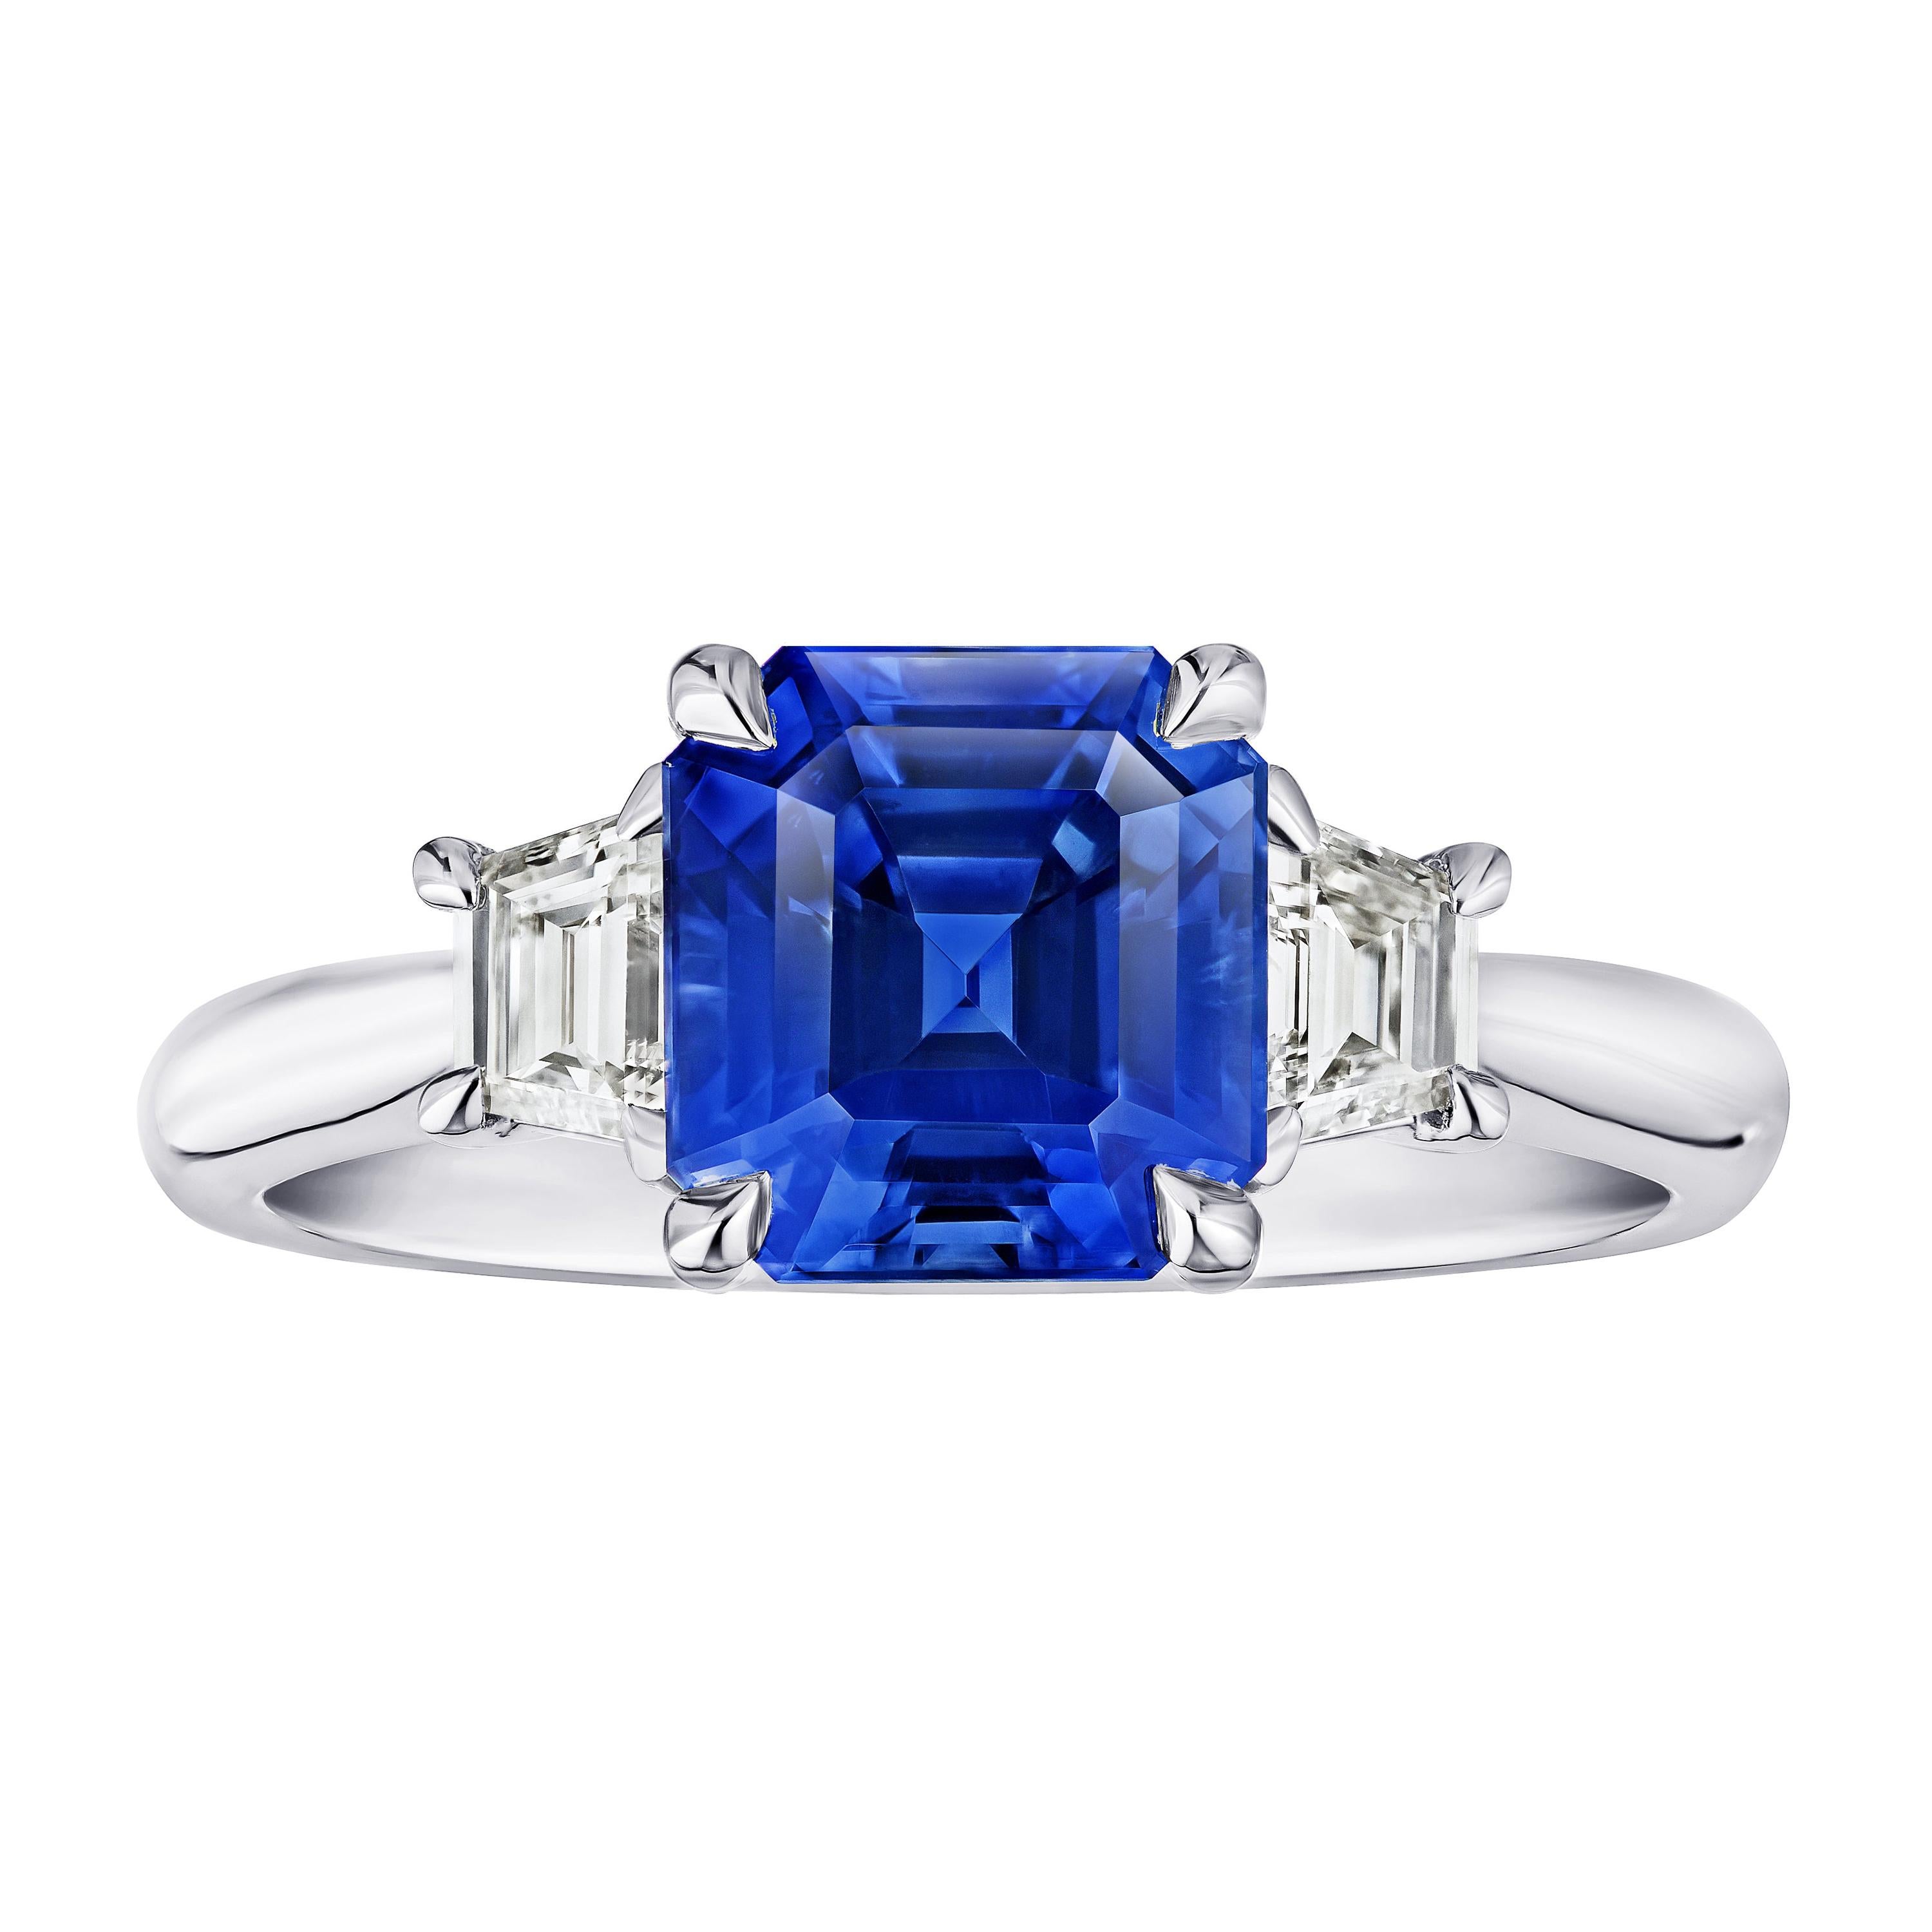 3.18 Carat Emerald Cut Blue Sapphire and Diamond Ring